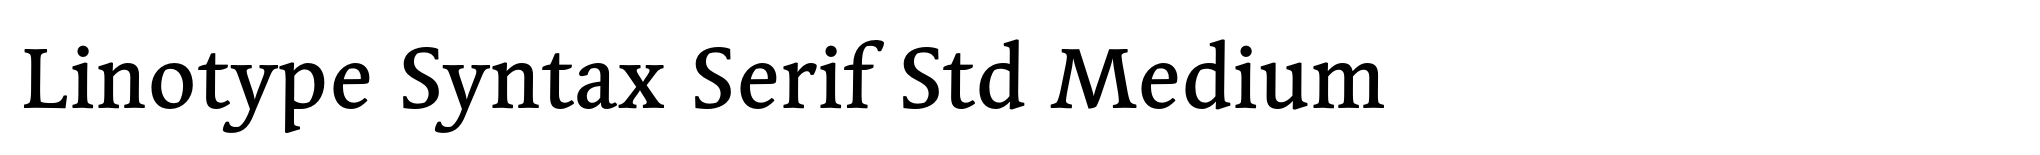 Linotype Syntax Serif Std Medium image